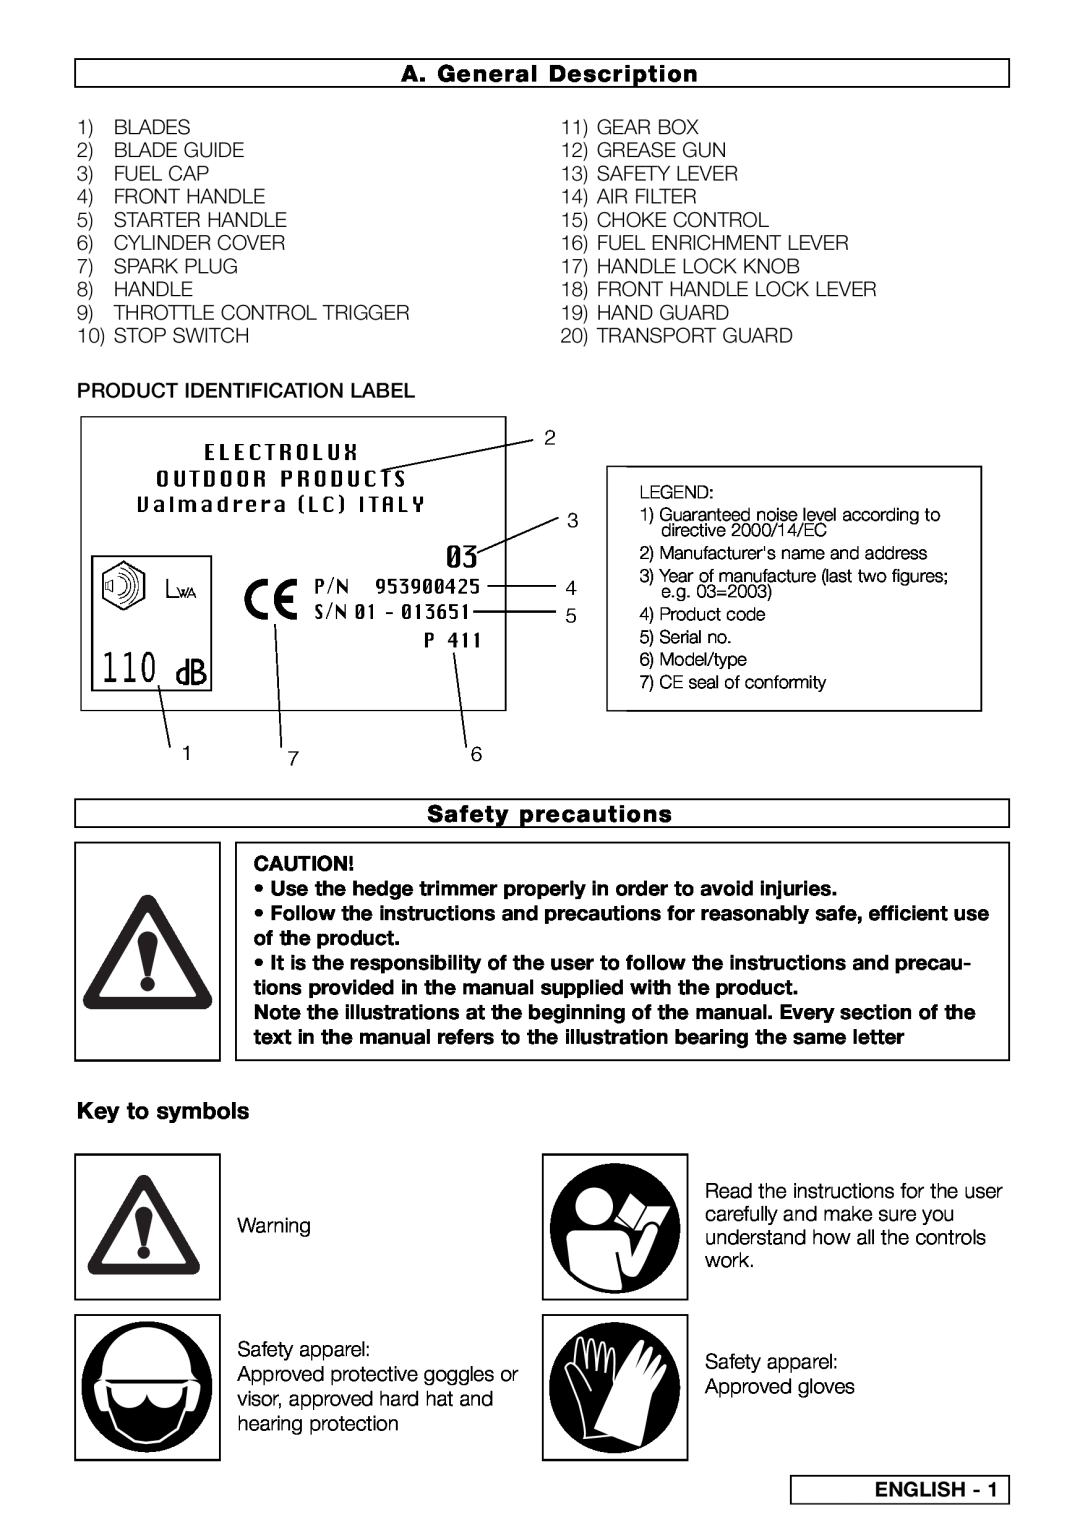 Electrolux TIVTIVOLI 50 / HG 50OLI 50 / HG 50 manual A. General Description, Safety precautions, Key to symbols 